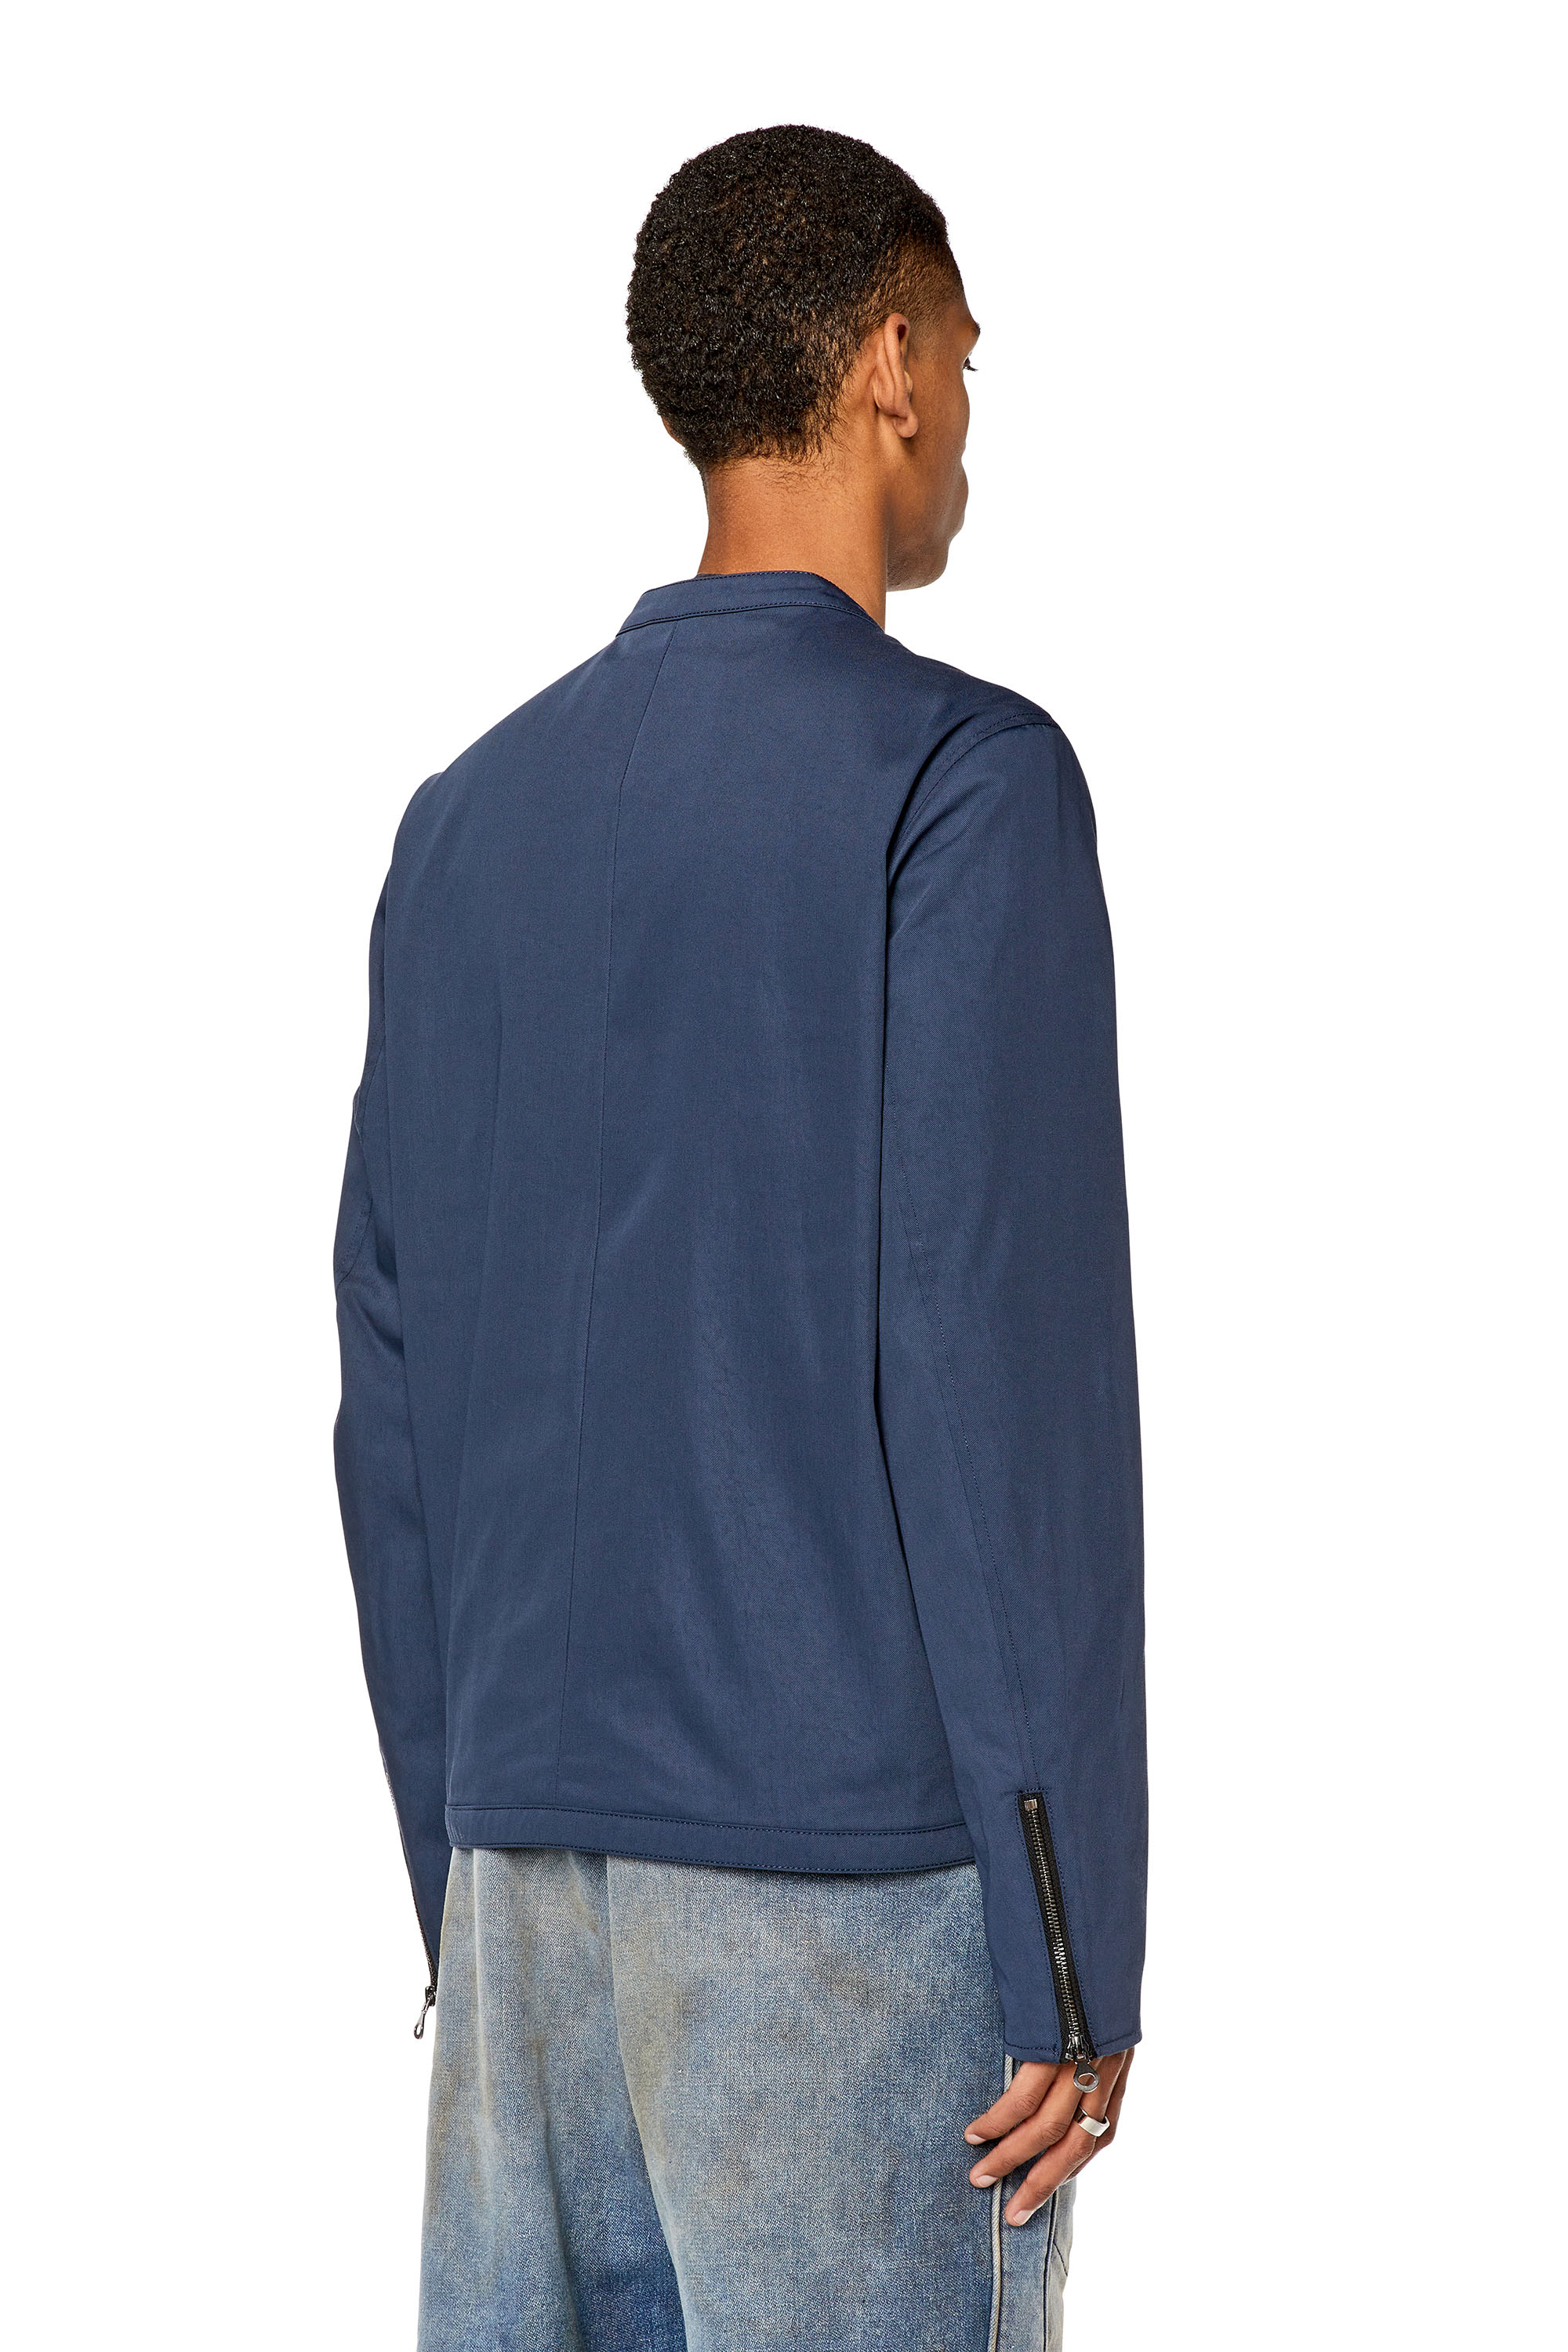 Diesel - J-GLORY-NW, Male Biker jacket in cotton-touch nylon in Blue - Image 3